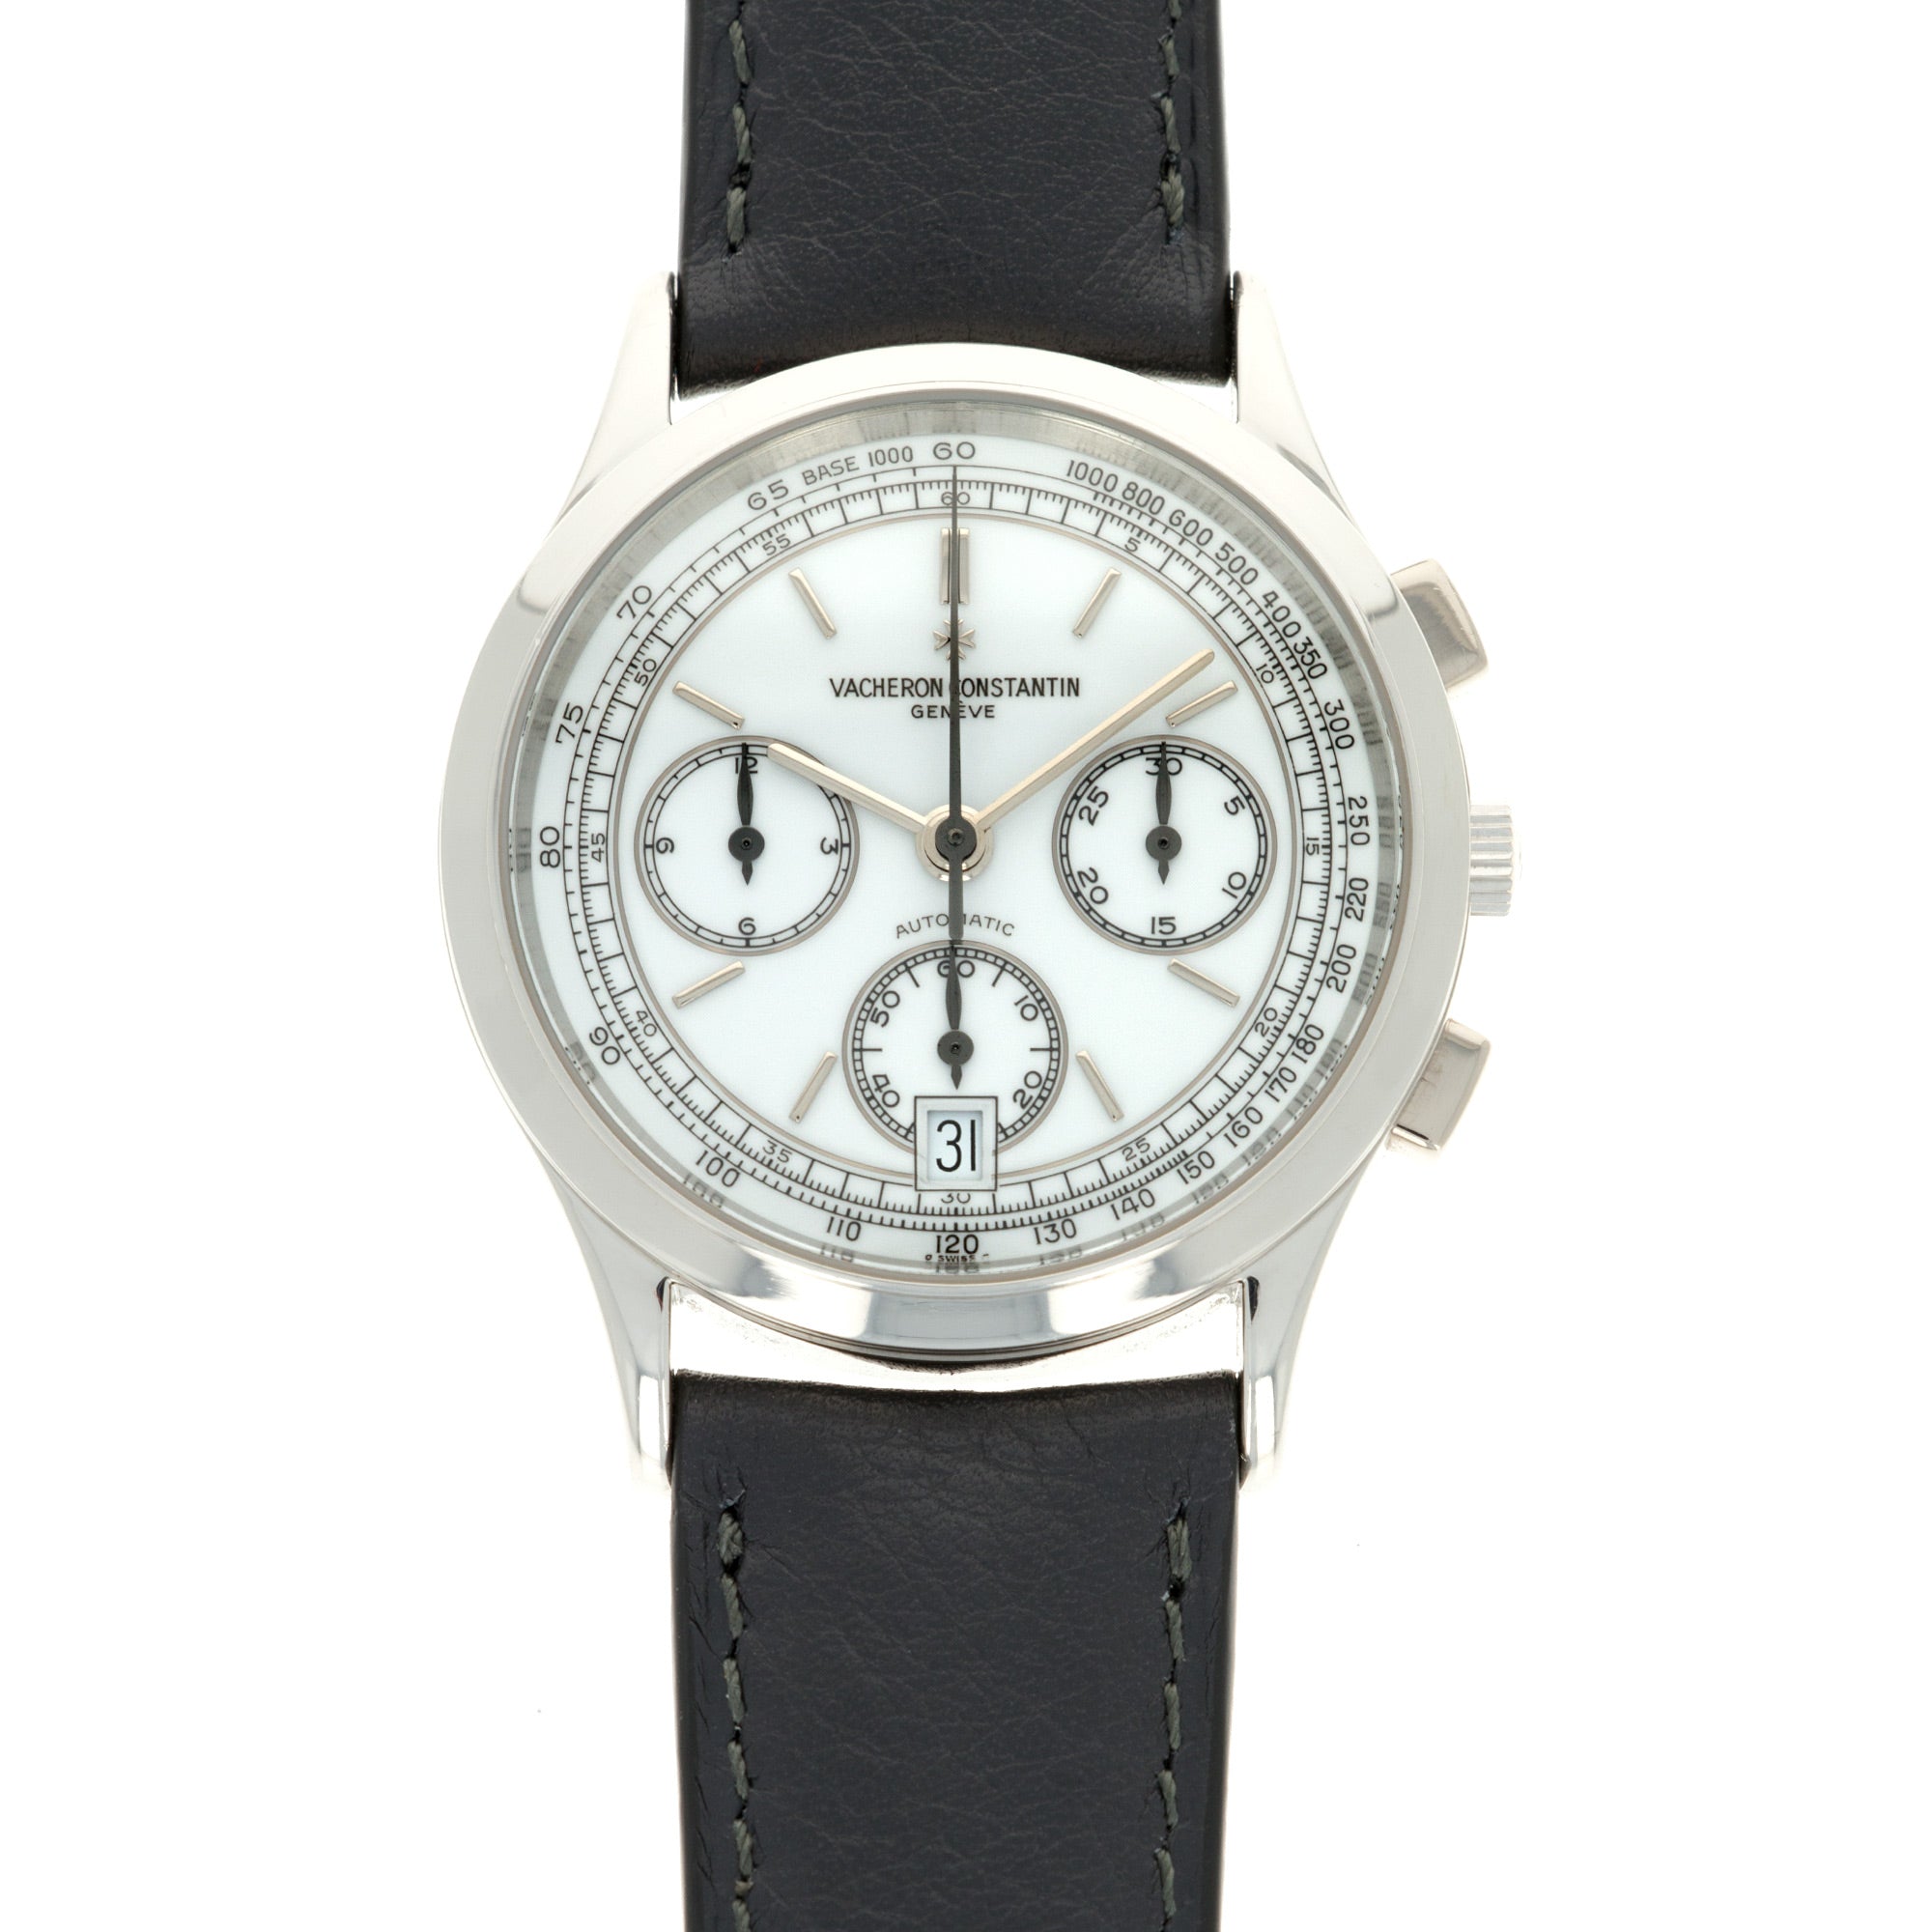 Vacheron Constantin - Vacheron Constantin Platinum Chronograph Ref. 49002 - The Keystone Watches